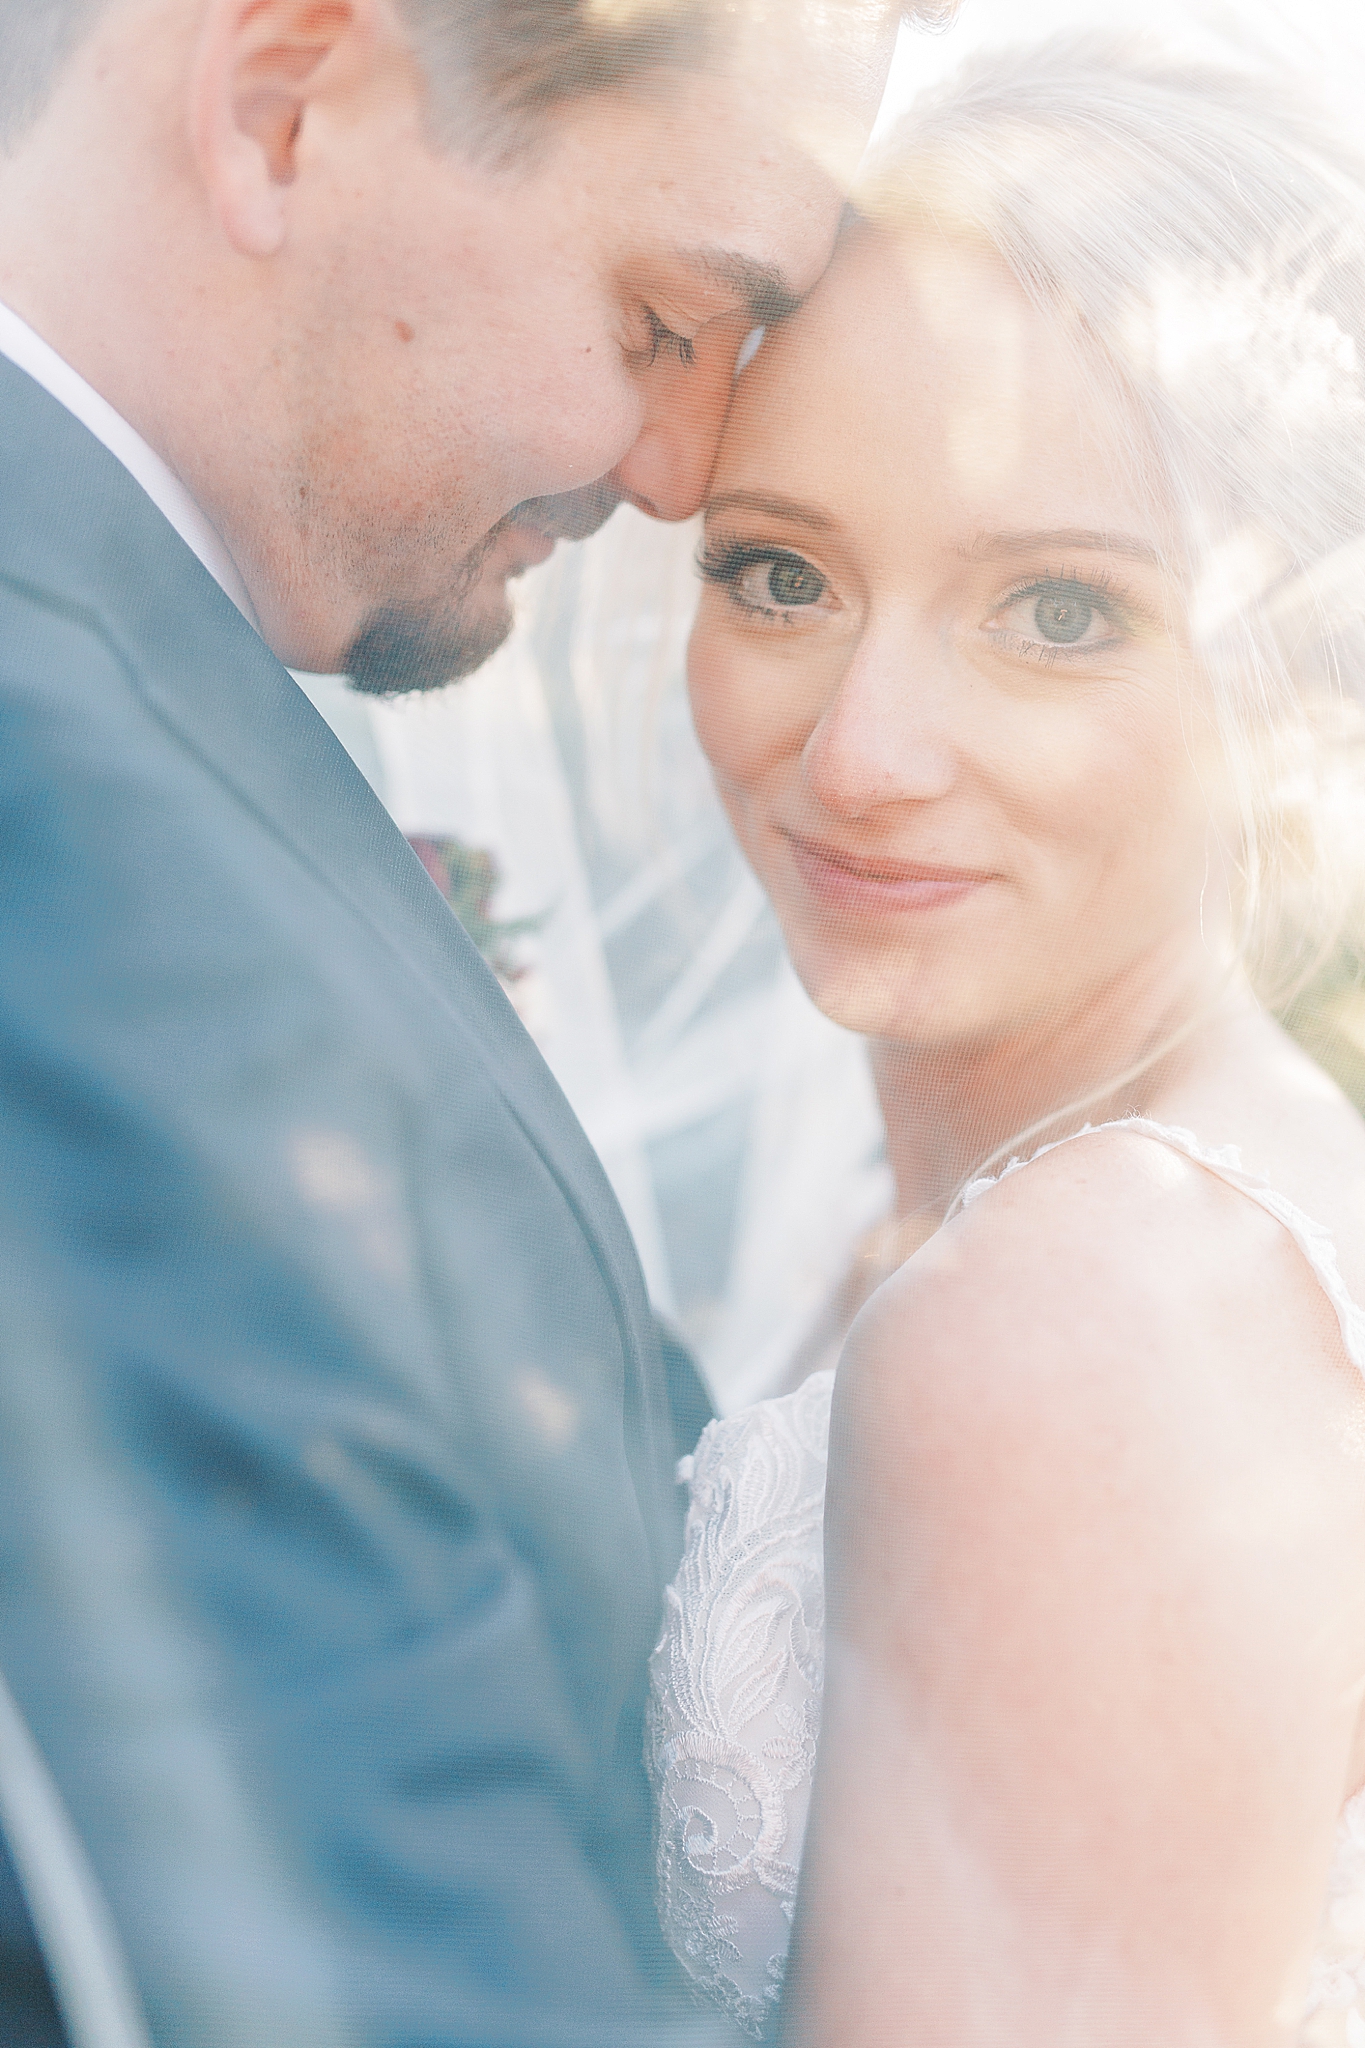 newlyweds pose under bride's veil